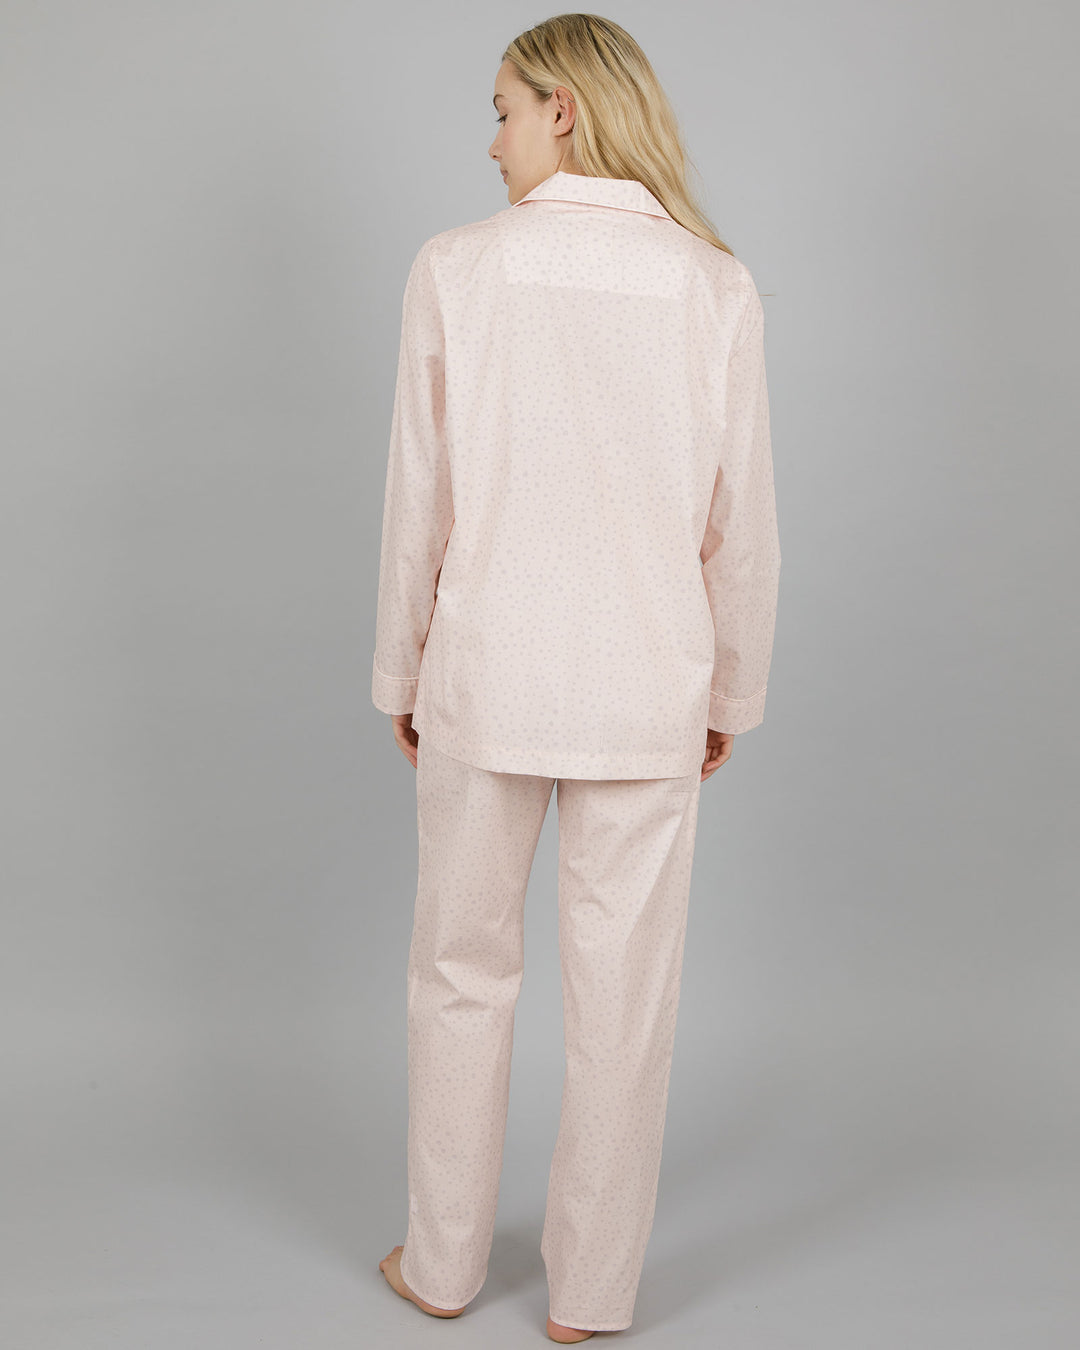 Womens Long Pyjamas Pink Dots Back - Woodstock Laundry